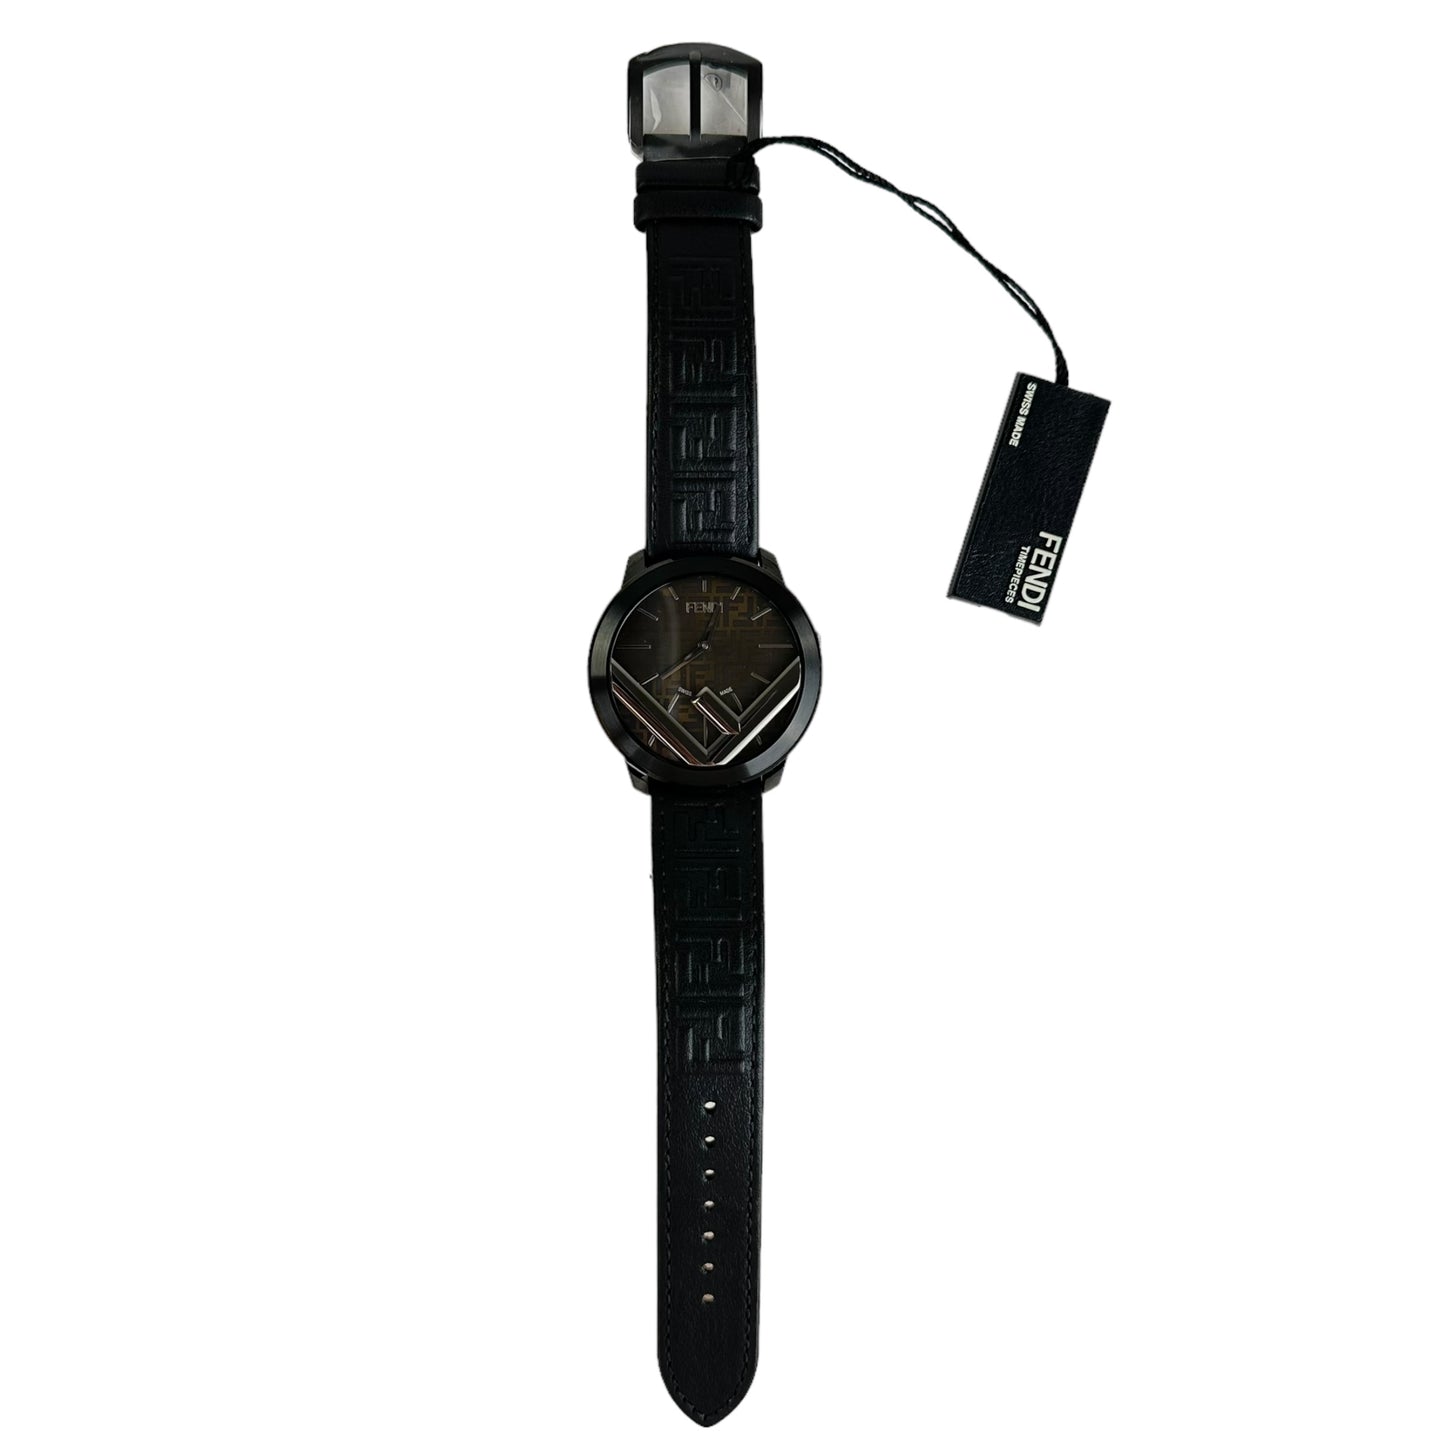 Fendi Run Away Black Dial Quartz Watch